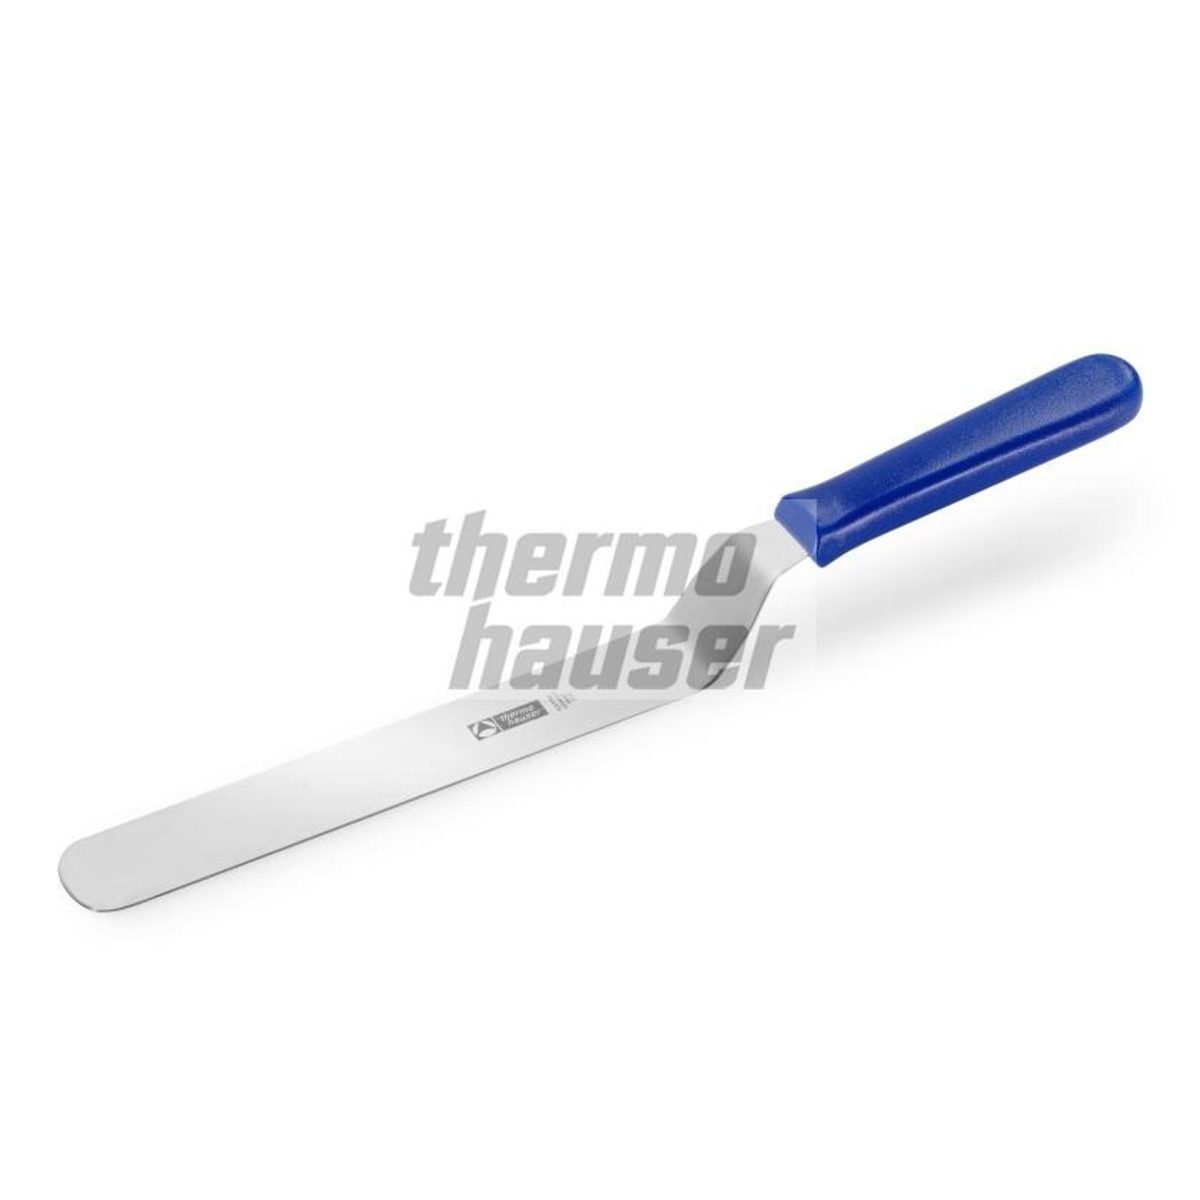 thermohauser palet bicagi egik 10 cm 1203 1 1 Thermohauser Palet Bıçağı Eğik 10 Cm